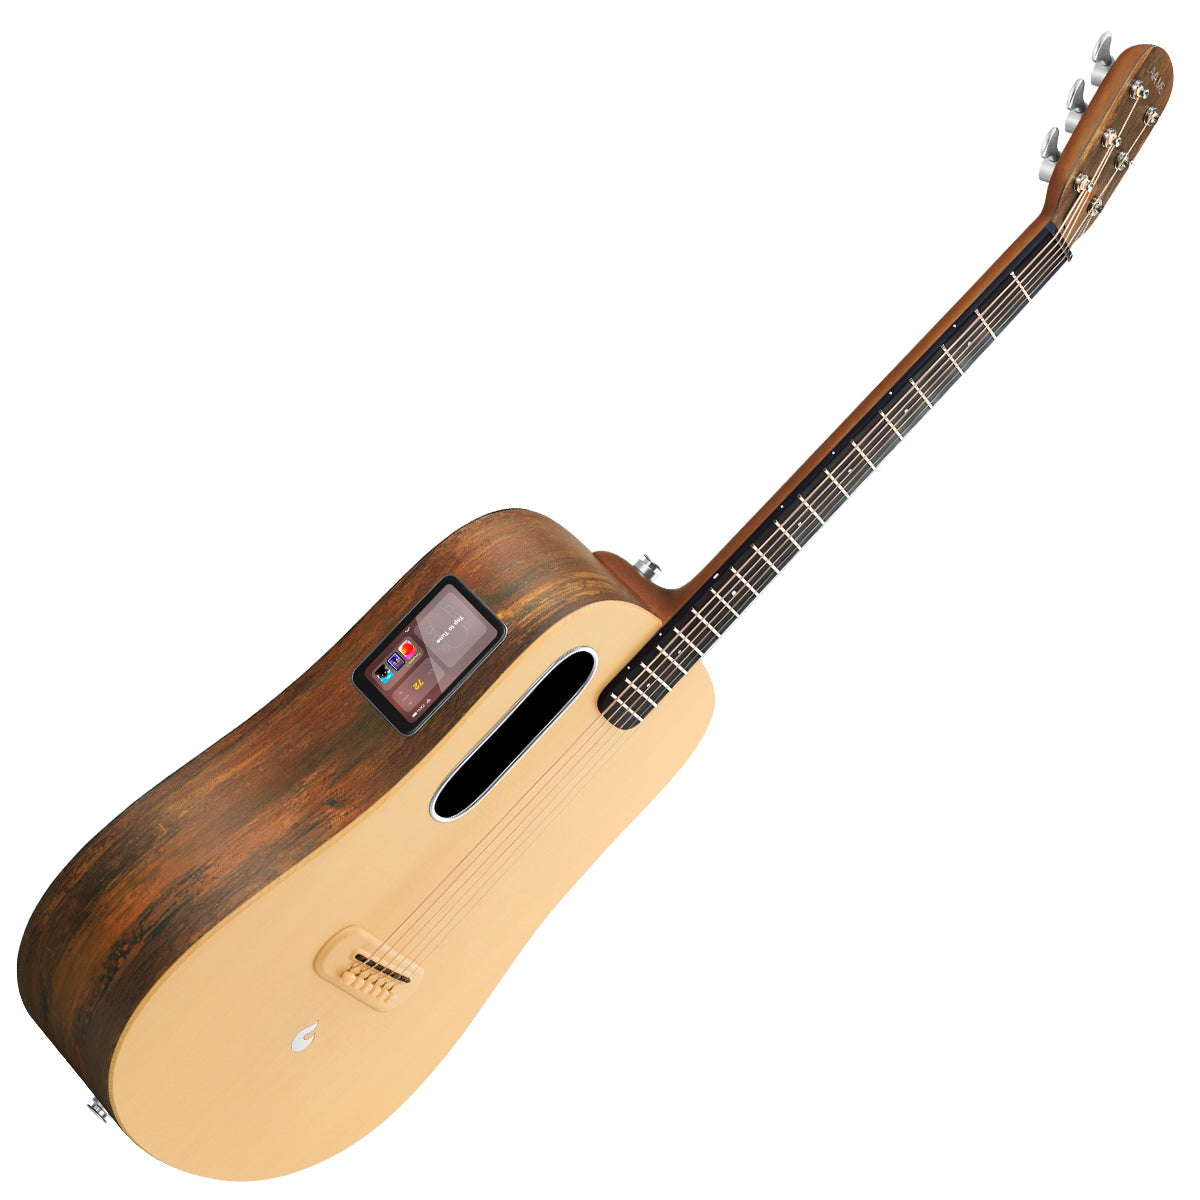 LAVA ME 4 SPRUCE 36" with Lite Bag ~ Woodgrain Brown/Burleywood, Acoustic Guitar for sale at Richards Guitars.